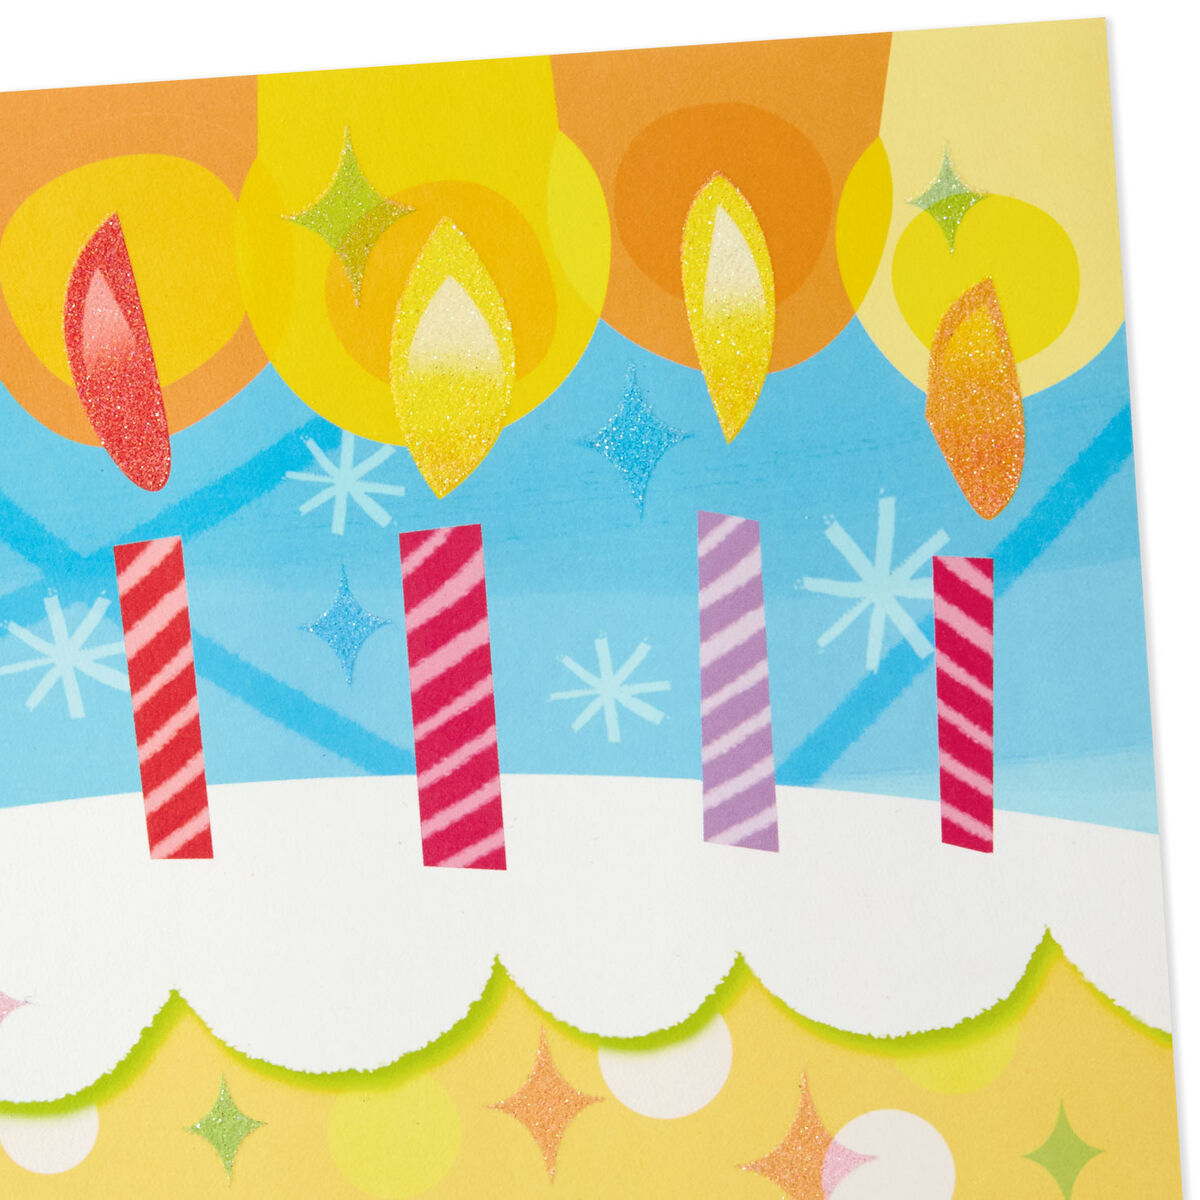 Cake and Candles Large Spanish-Language Pop Up Birthday Card, 12 ...